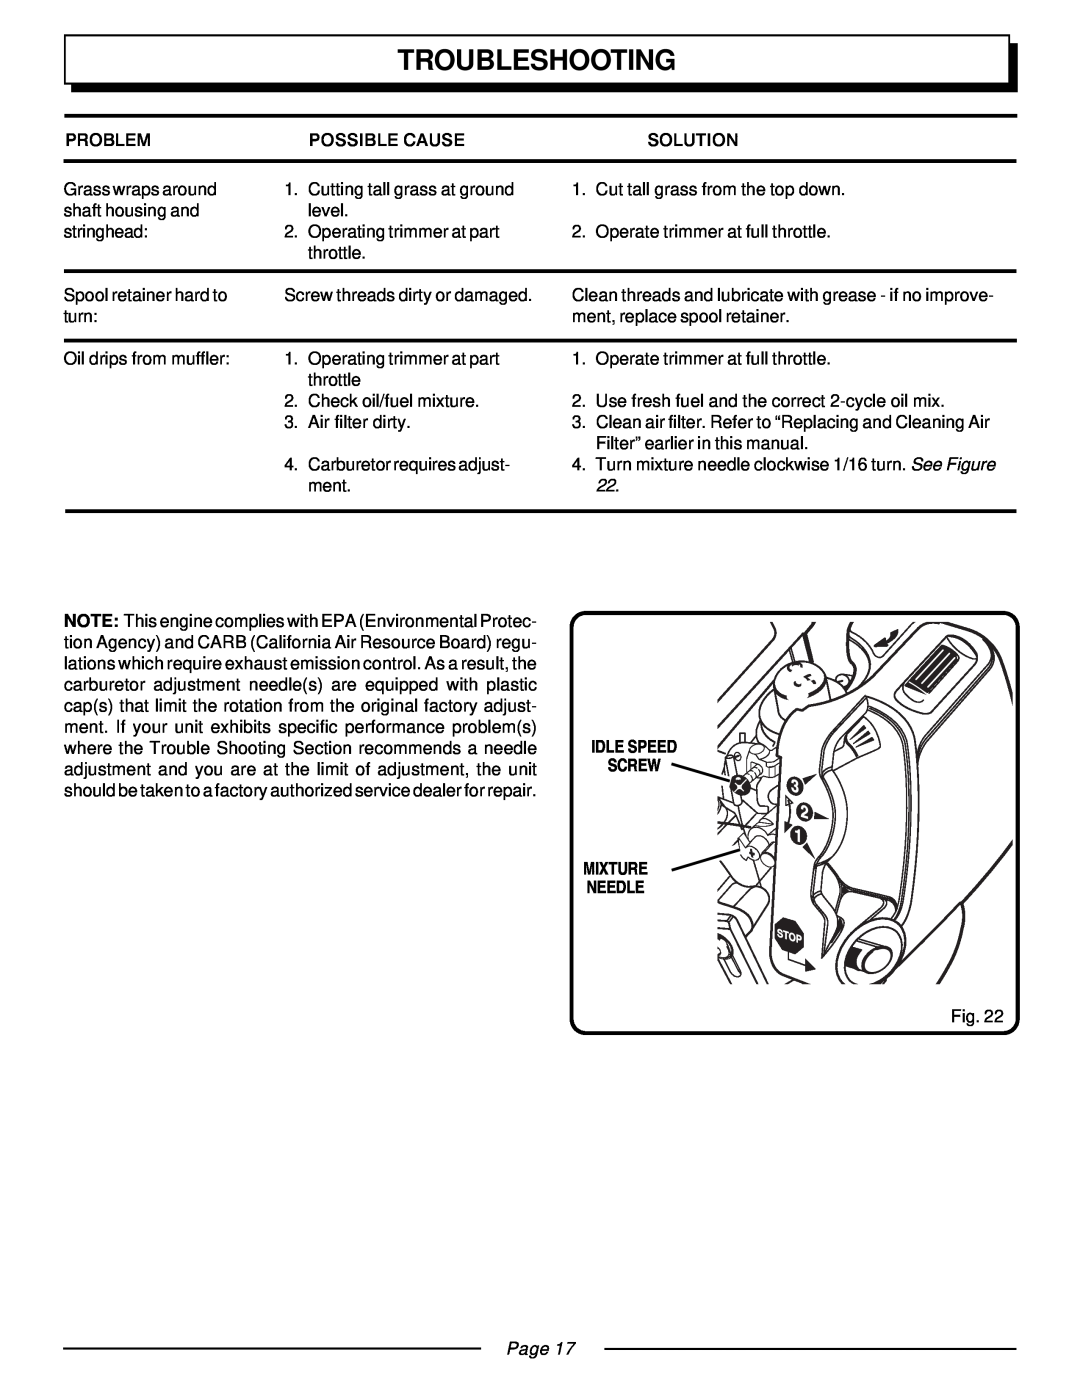 Homelite UT20933, UT20930 manual Troubleshooting, Idle Speed Screw, Mixture Needle, Page 